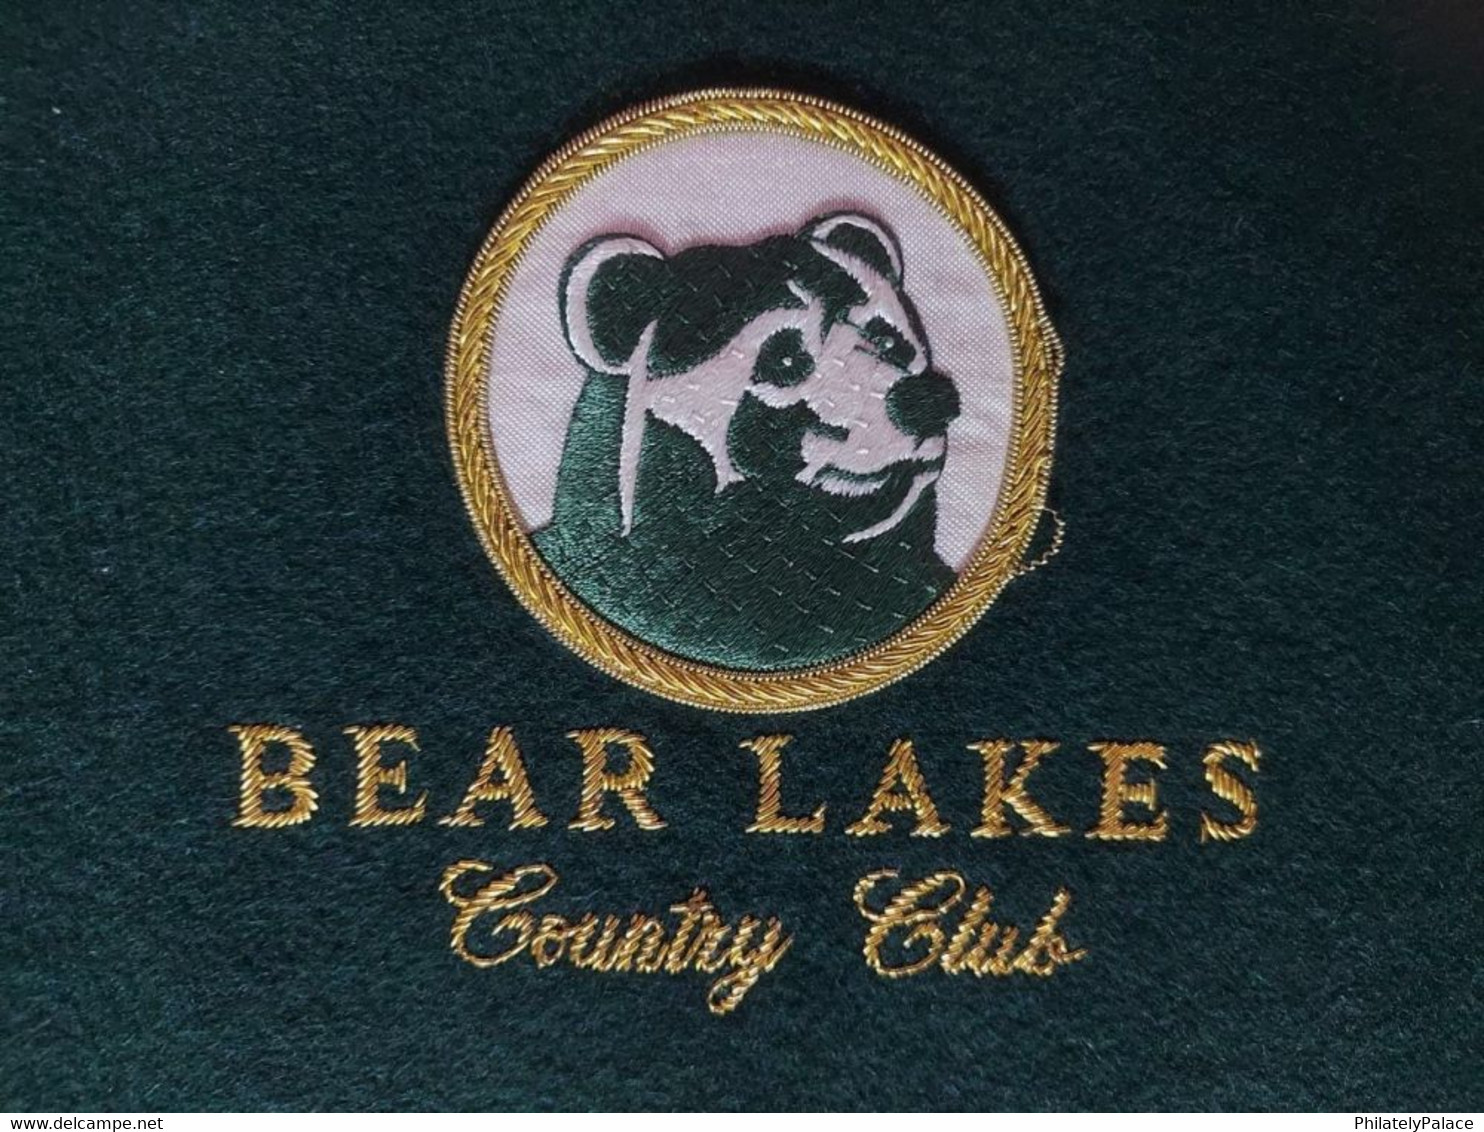 Bear Lakes County Club Related To Golf Sports, Blazer Pocket Badge (**) - Uniformes Recordatorios & Misc